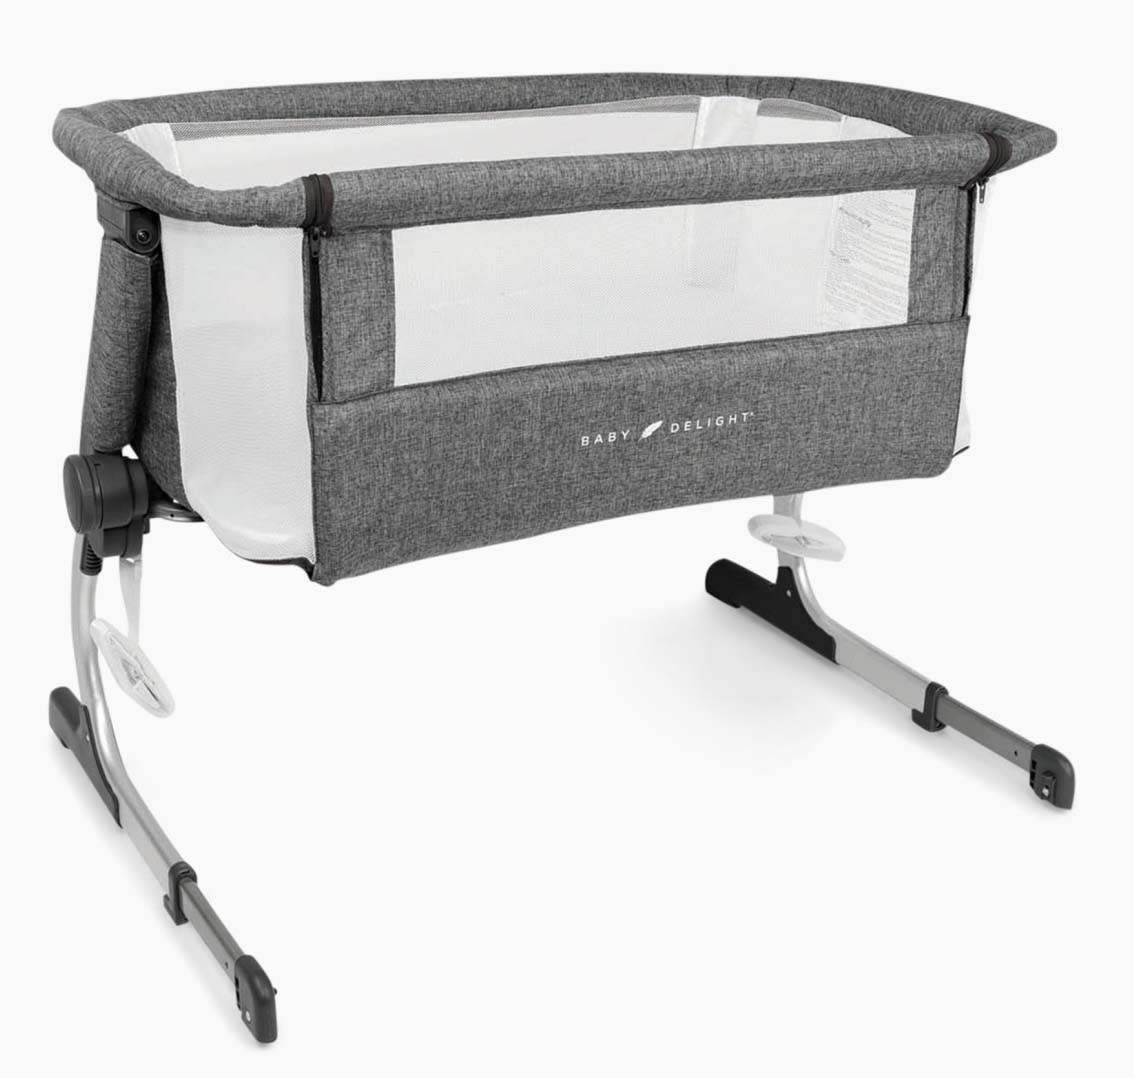 White and dark grey bassinet